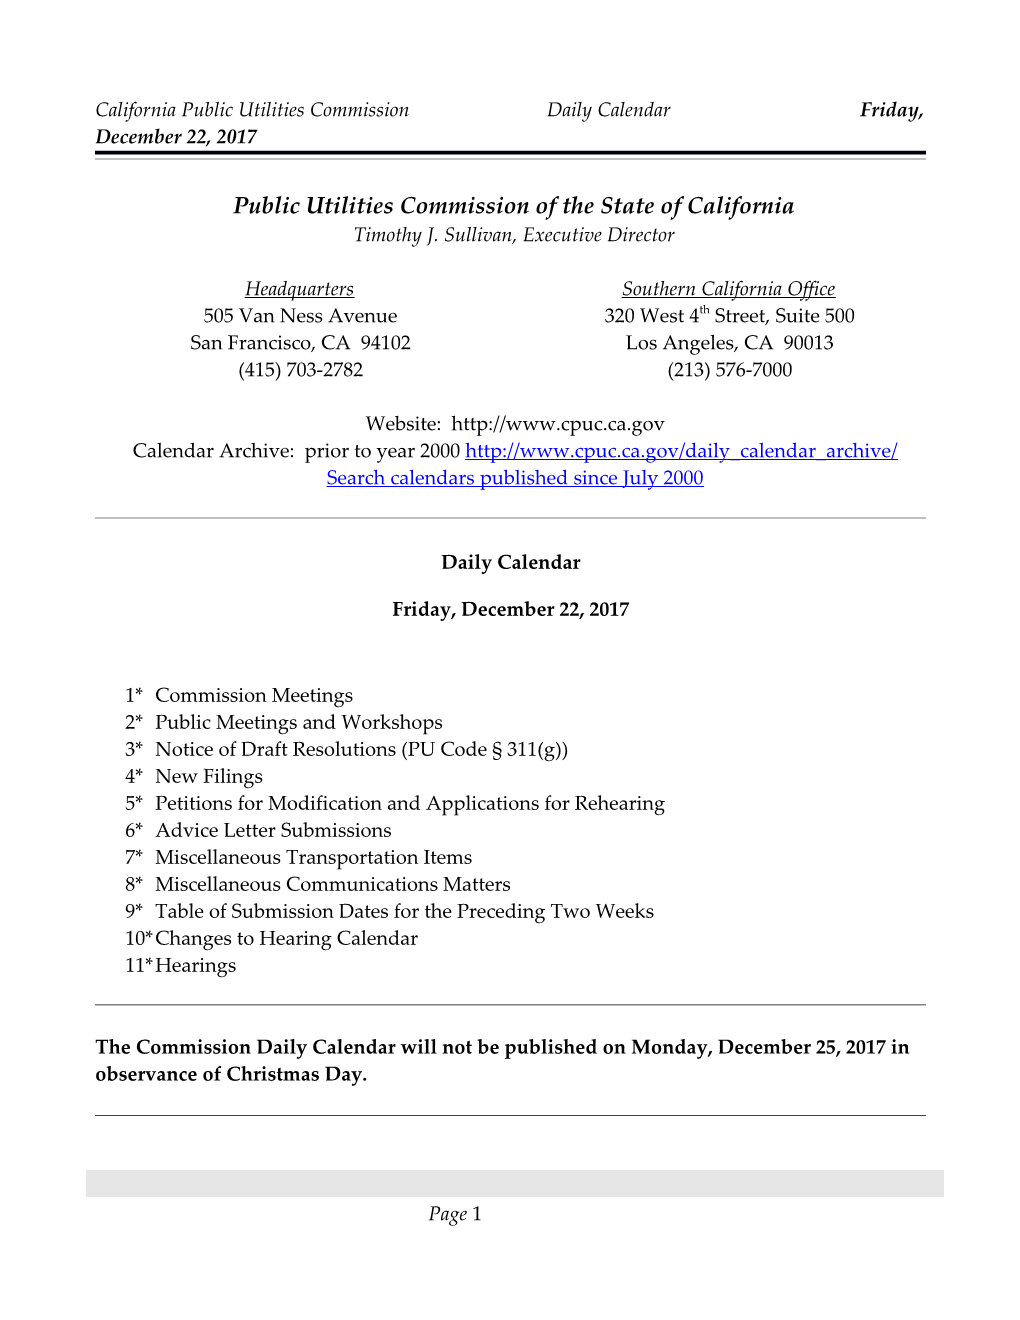 California Public Utilities Commission Daily Calendar Friday, December 22, 2017